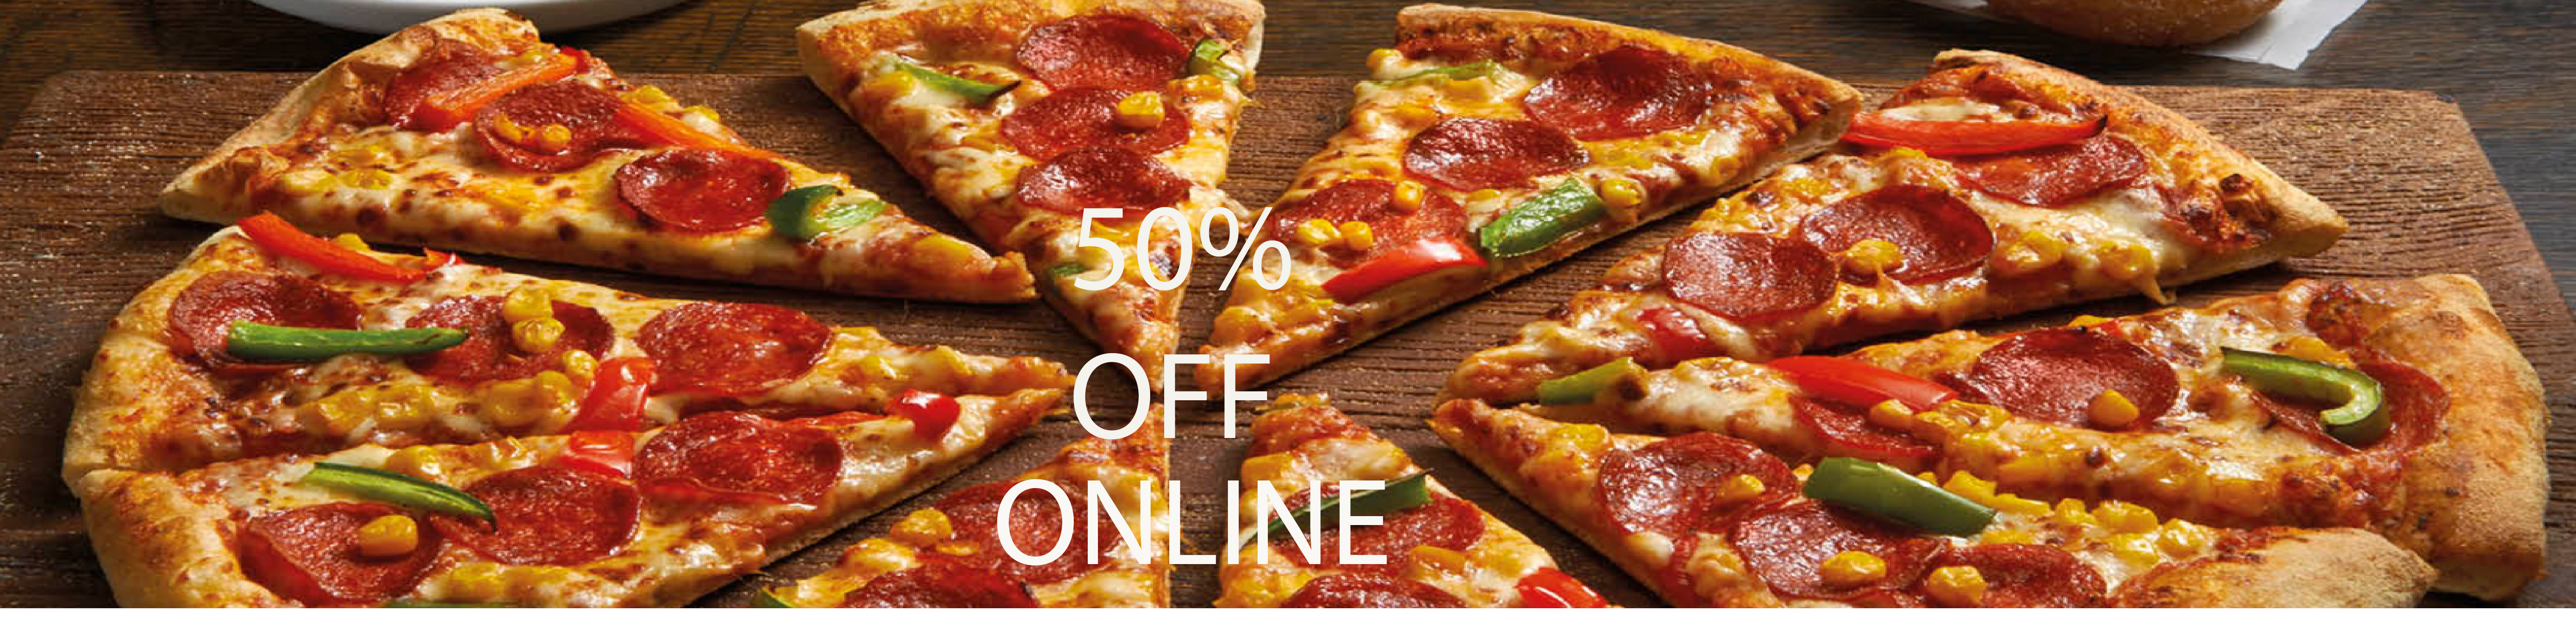 online-discount-pizza